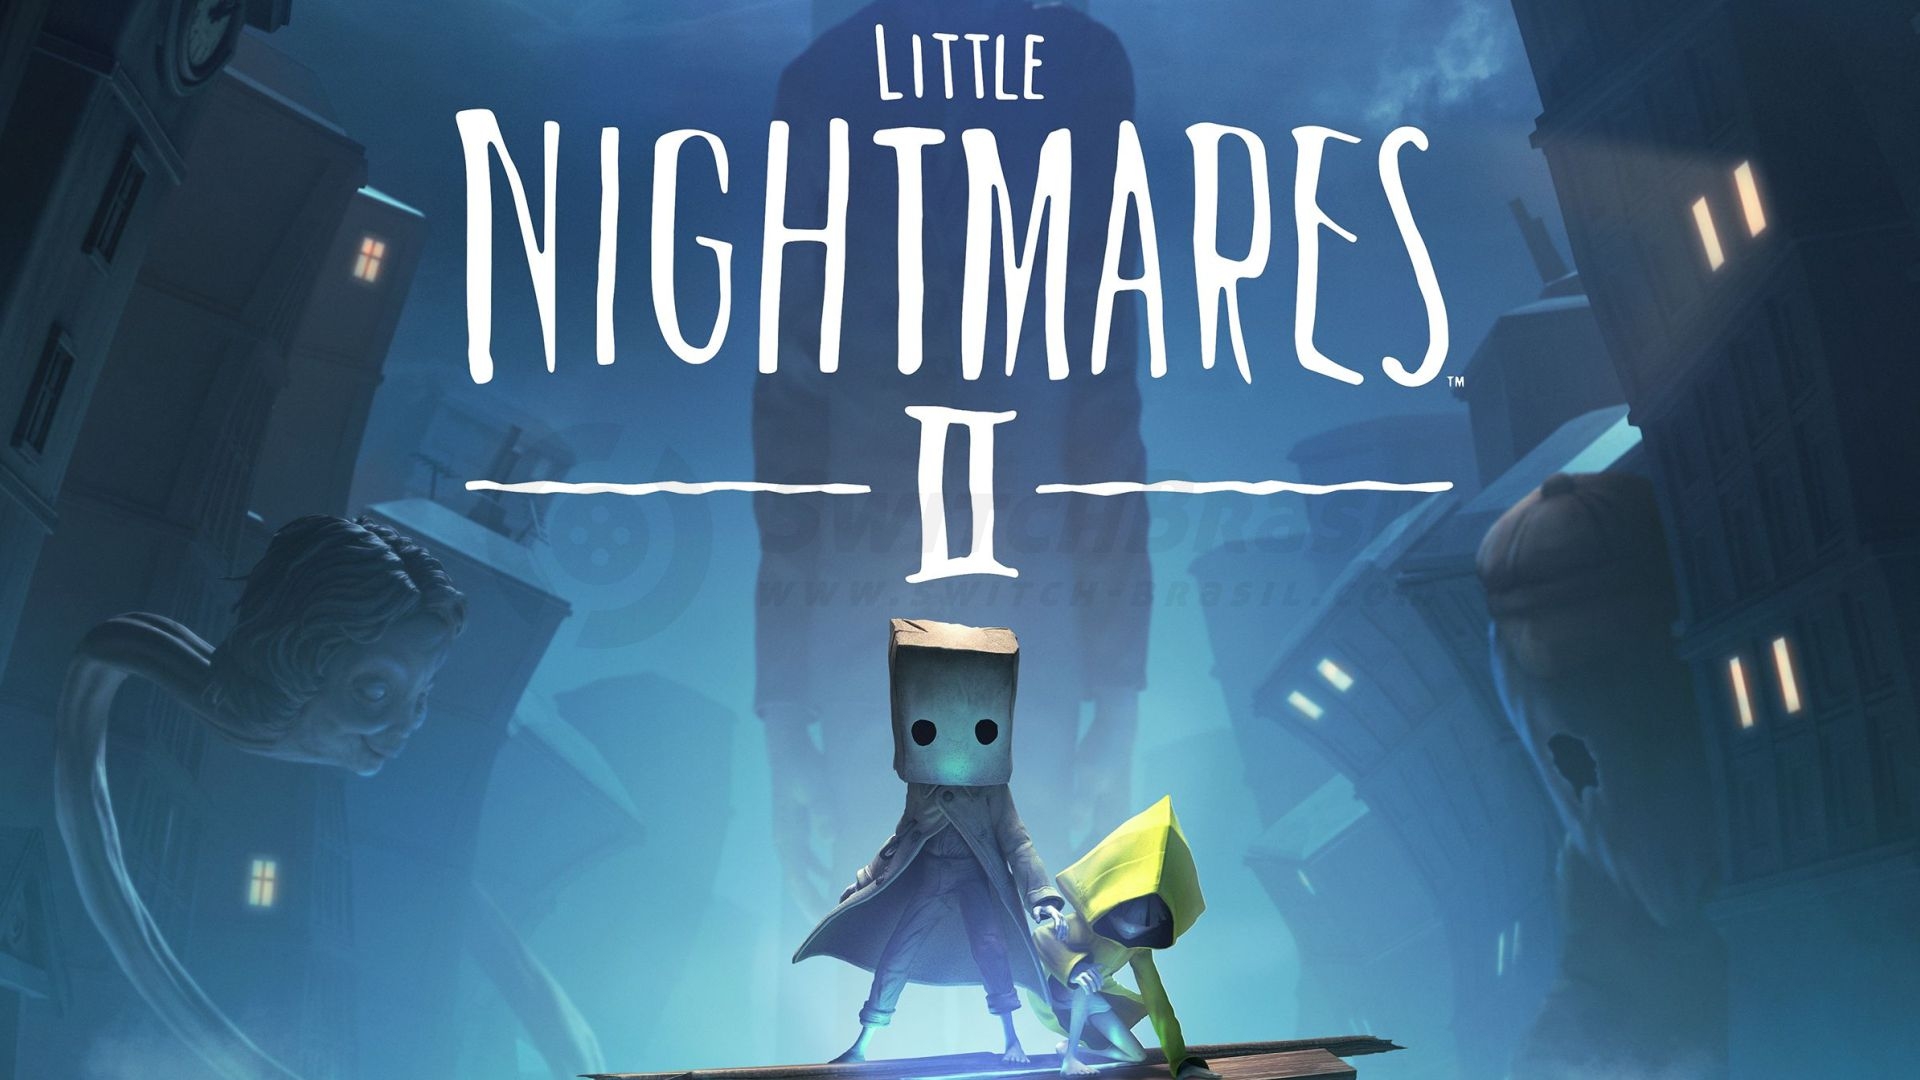 Little Nightmares II (2)(Xbox Series X / Xbox One) BRAND NEW 722674240062